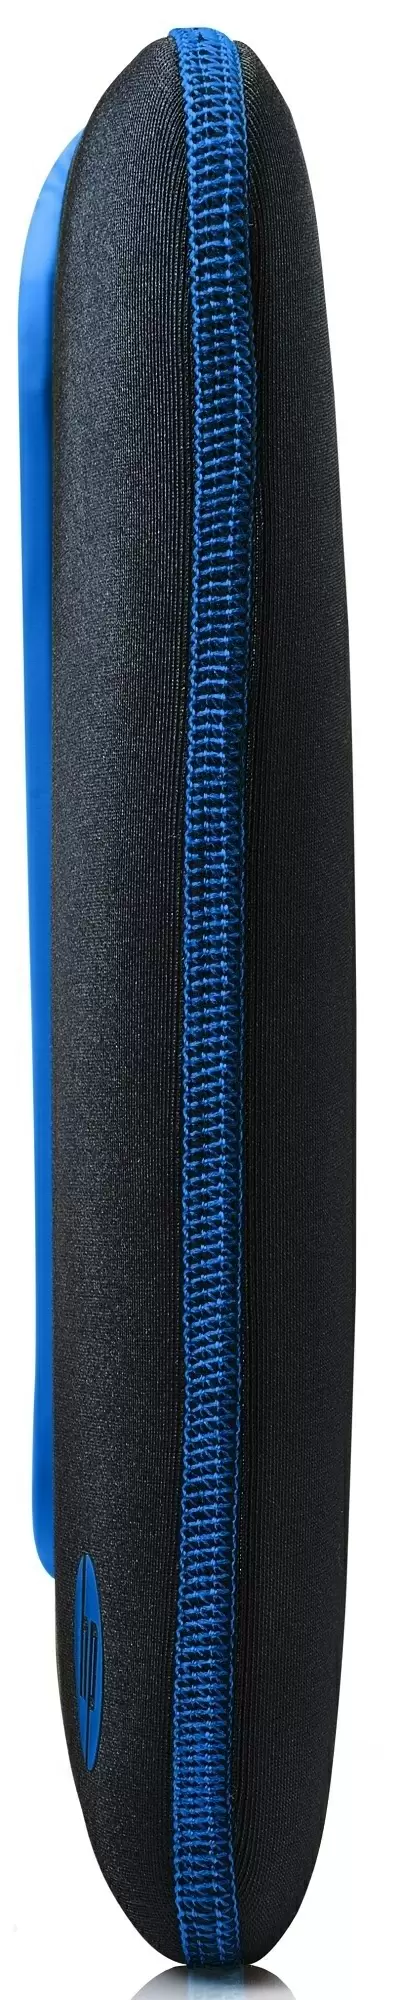 Чехол для ноутбука HP Chroma Sleeve, черный/синий